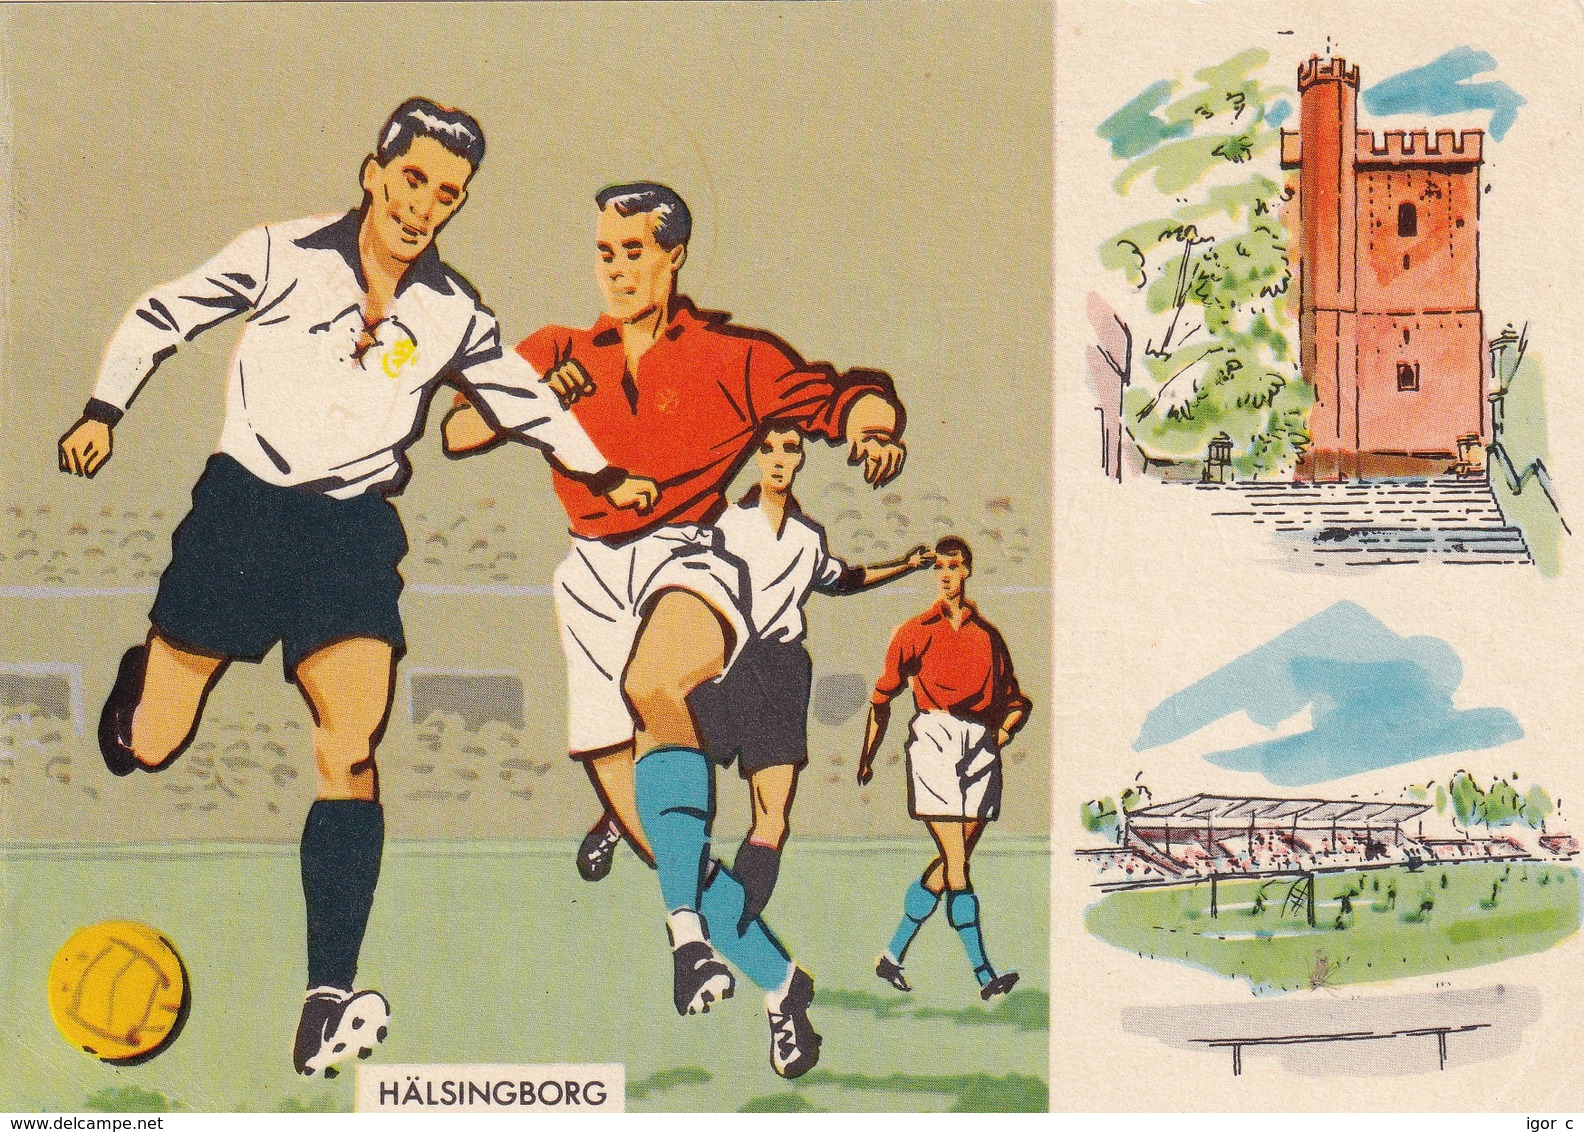 Sweden 1958 Cover;  Football Soccer Fussball Cacio Olympic Stadion Helsingorg 11.6.58 West Germany - Czechoslovakia 2:2 - 1958 – Sweden